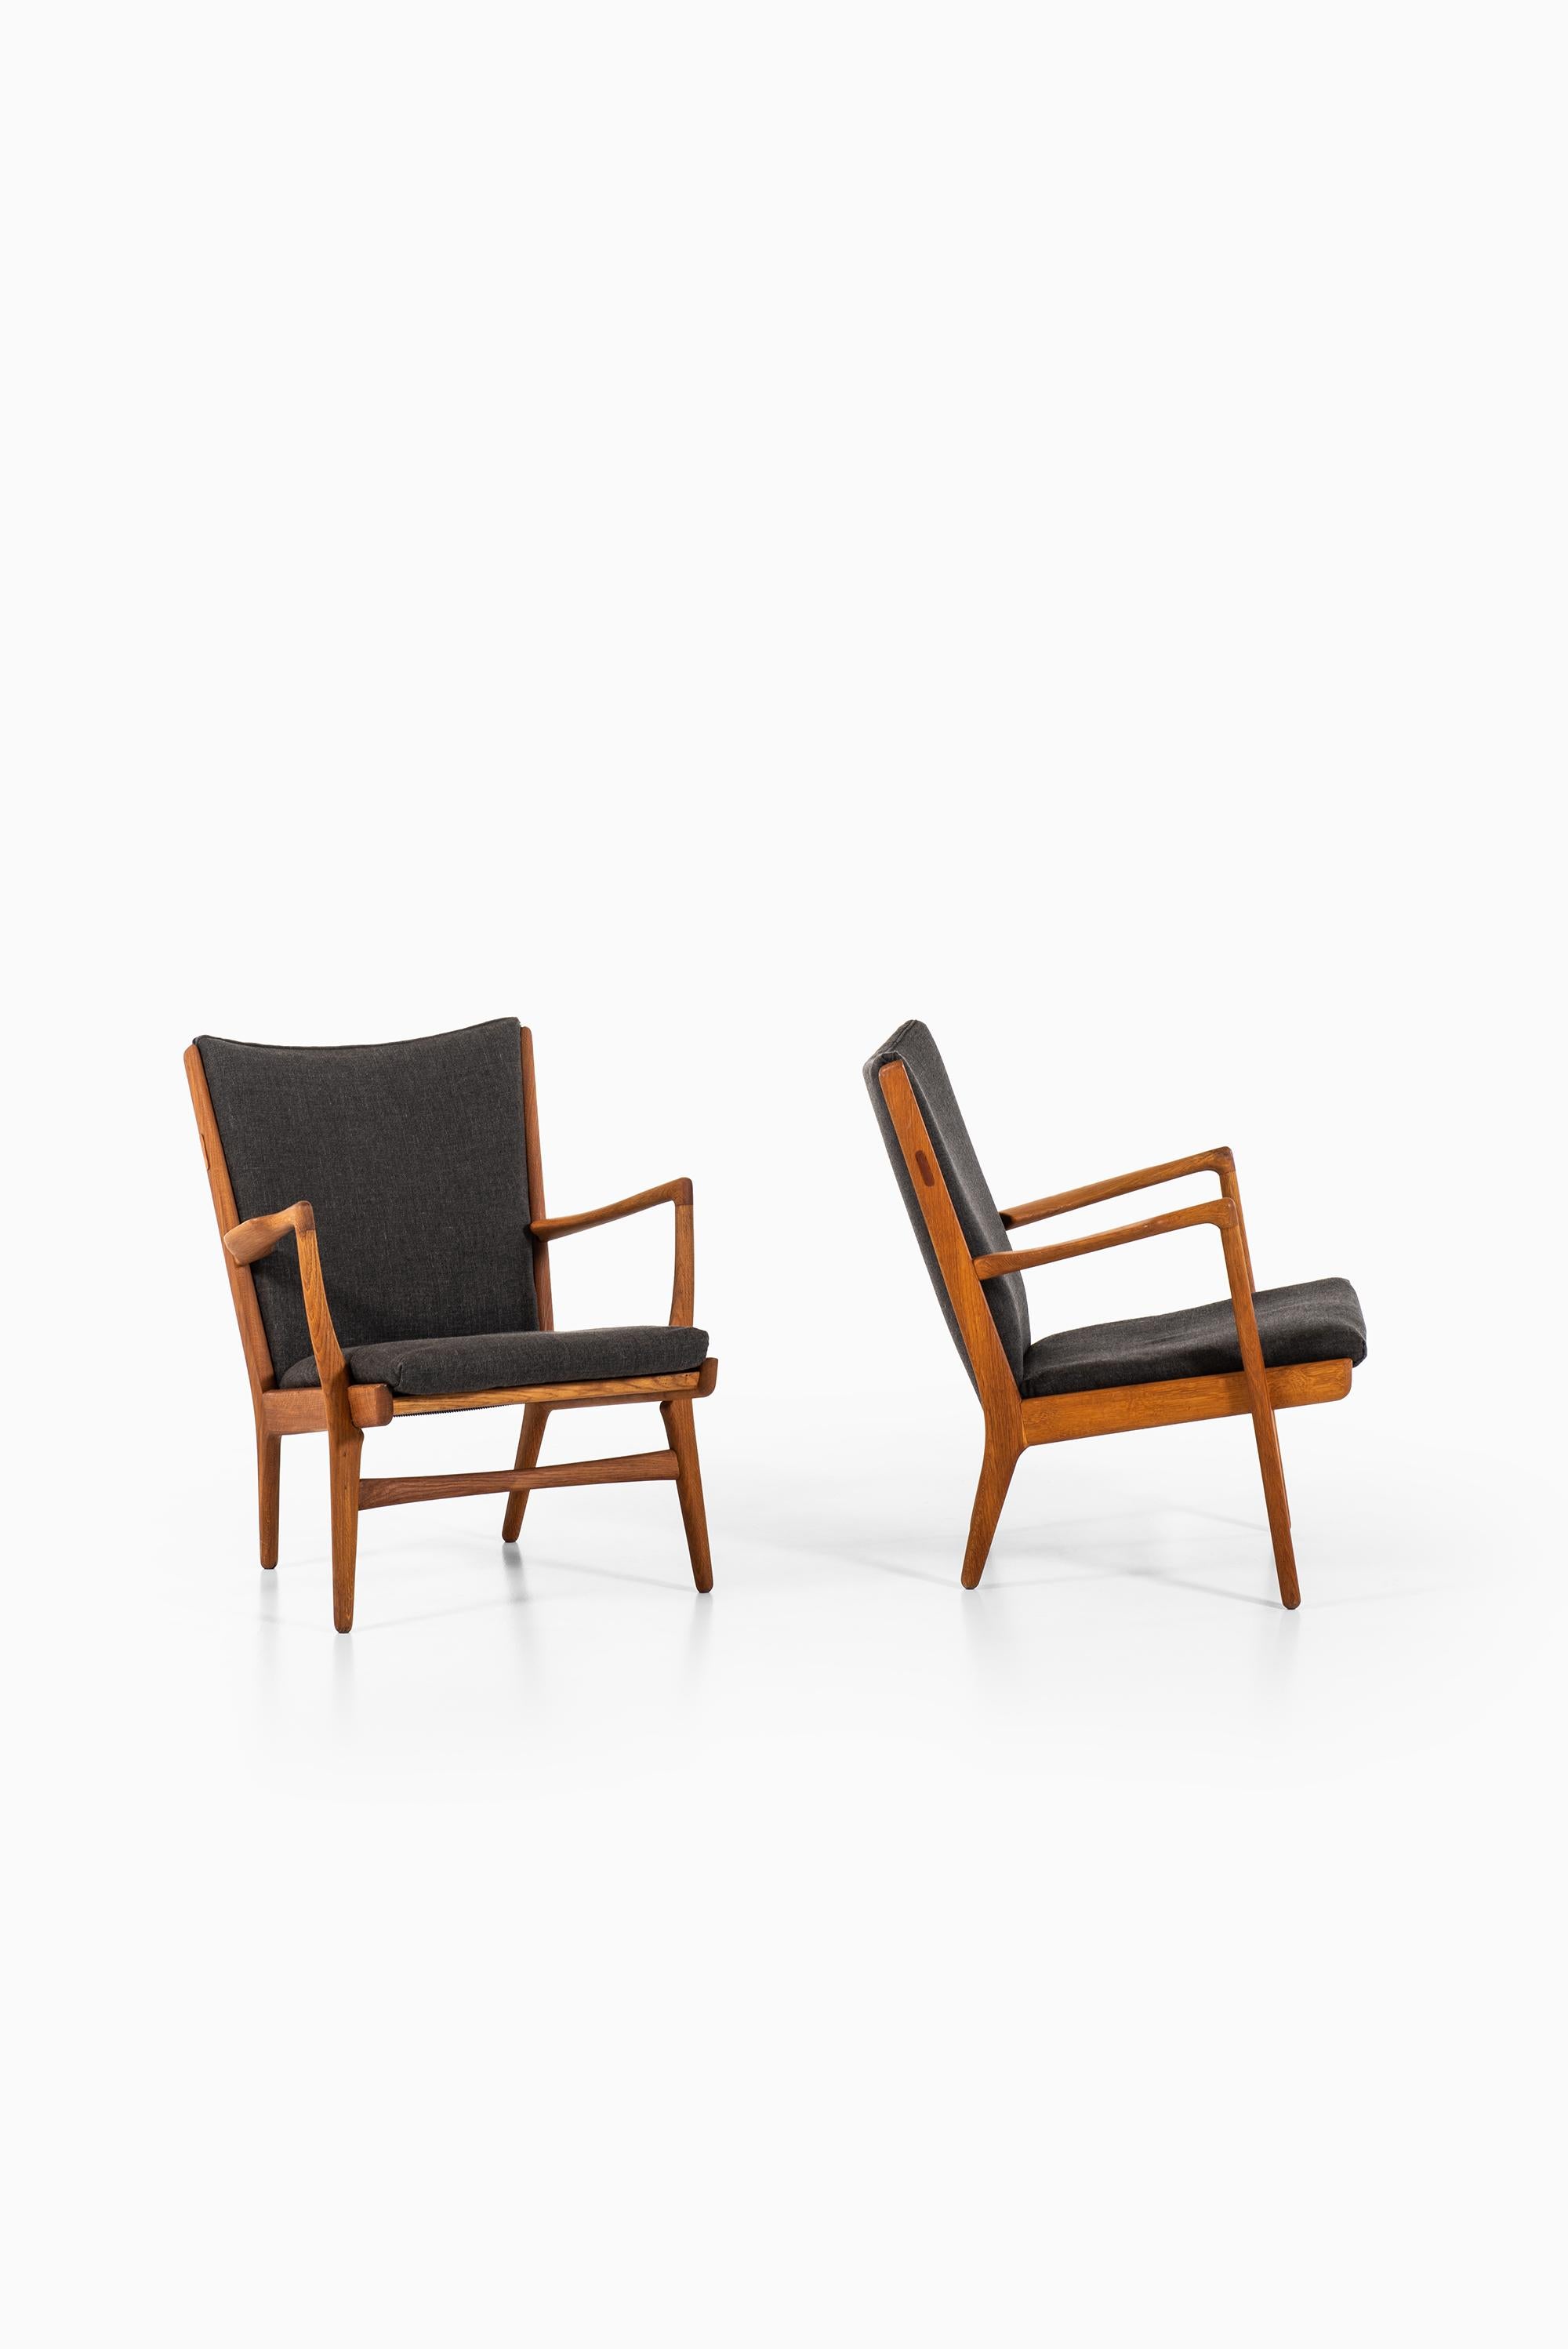 Danish Hans Wegner AP-16 Easy Chairs Produced by AP-Stolen in Denmark For Sale